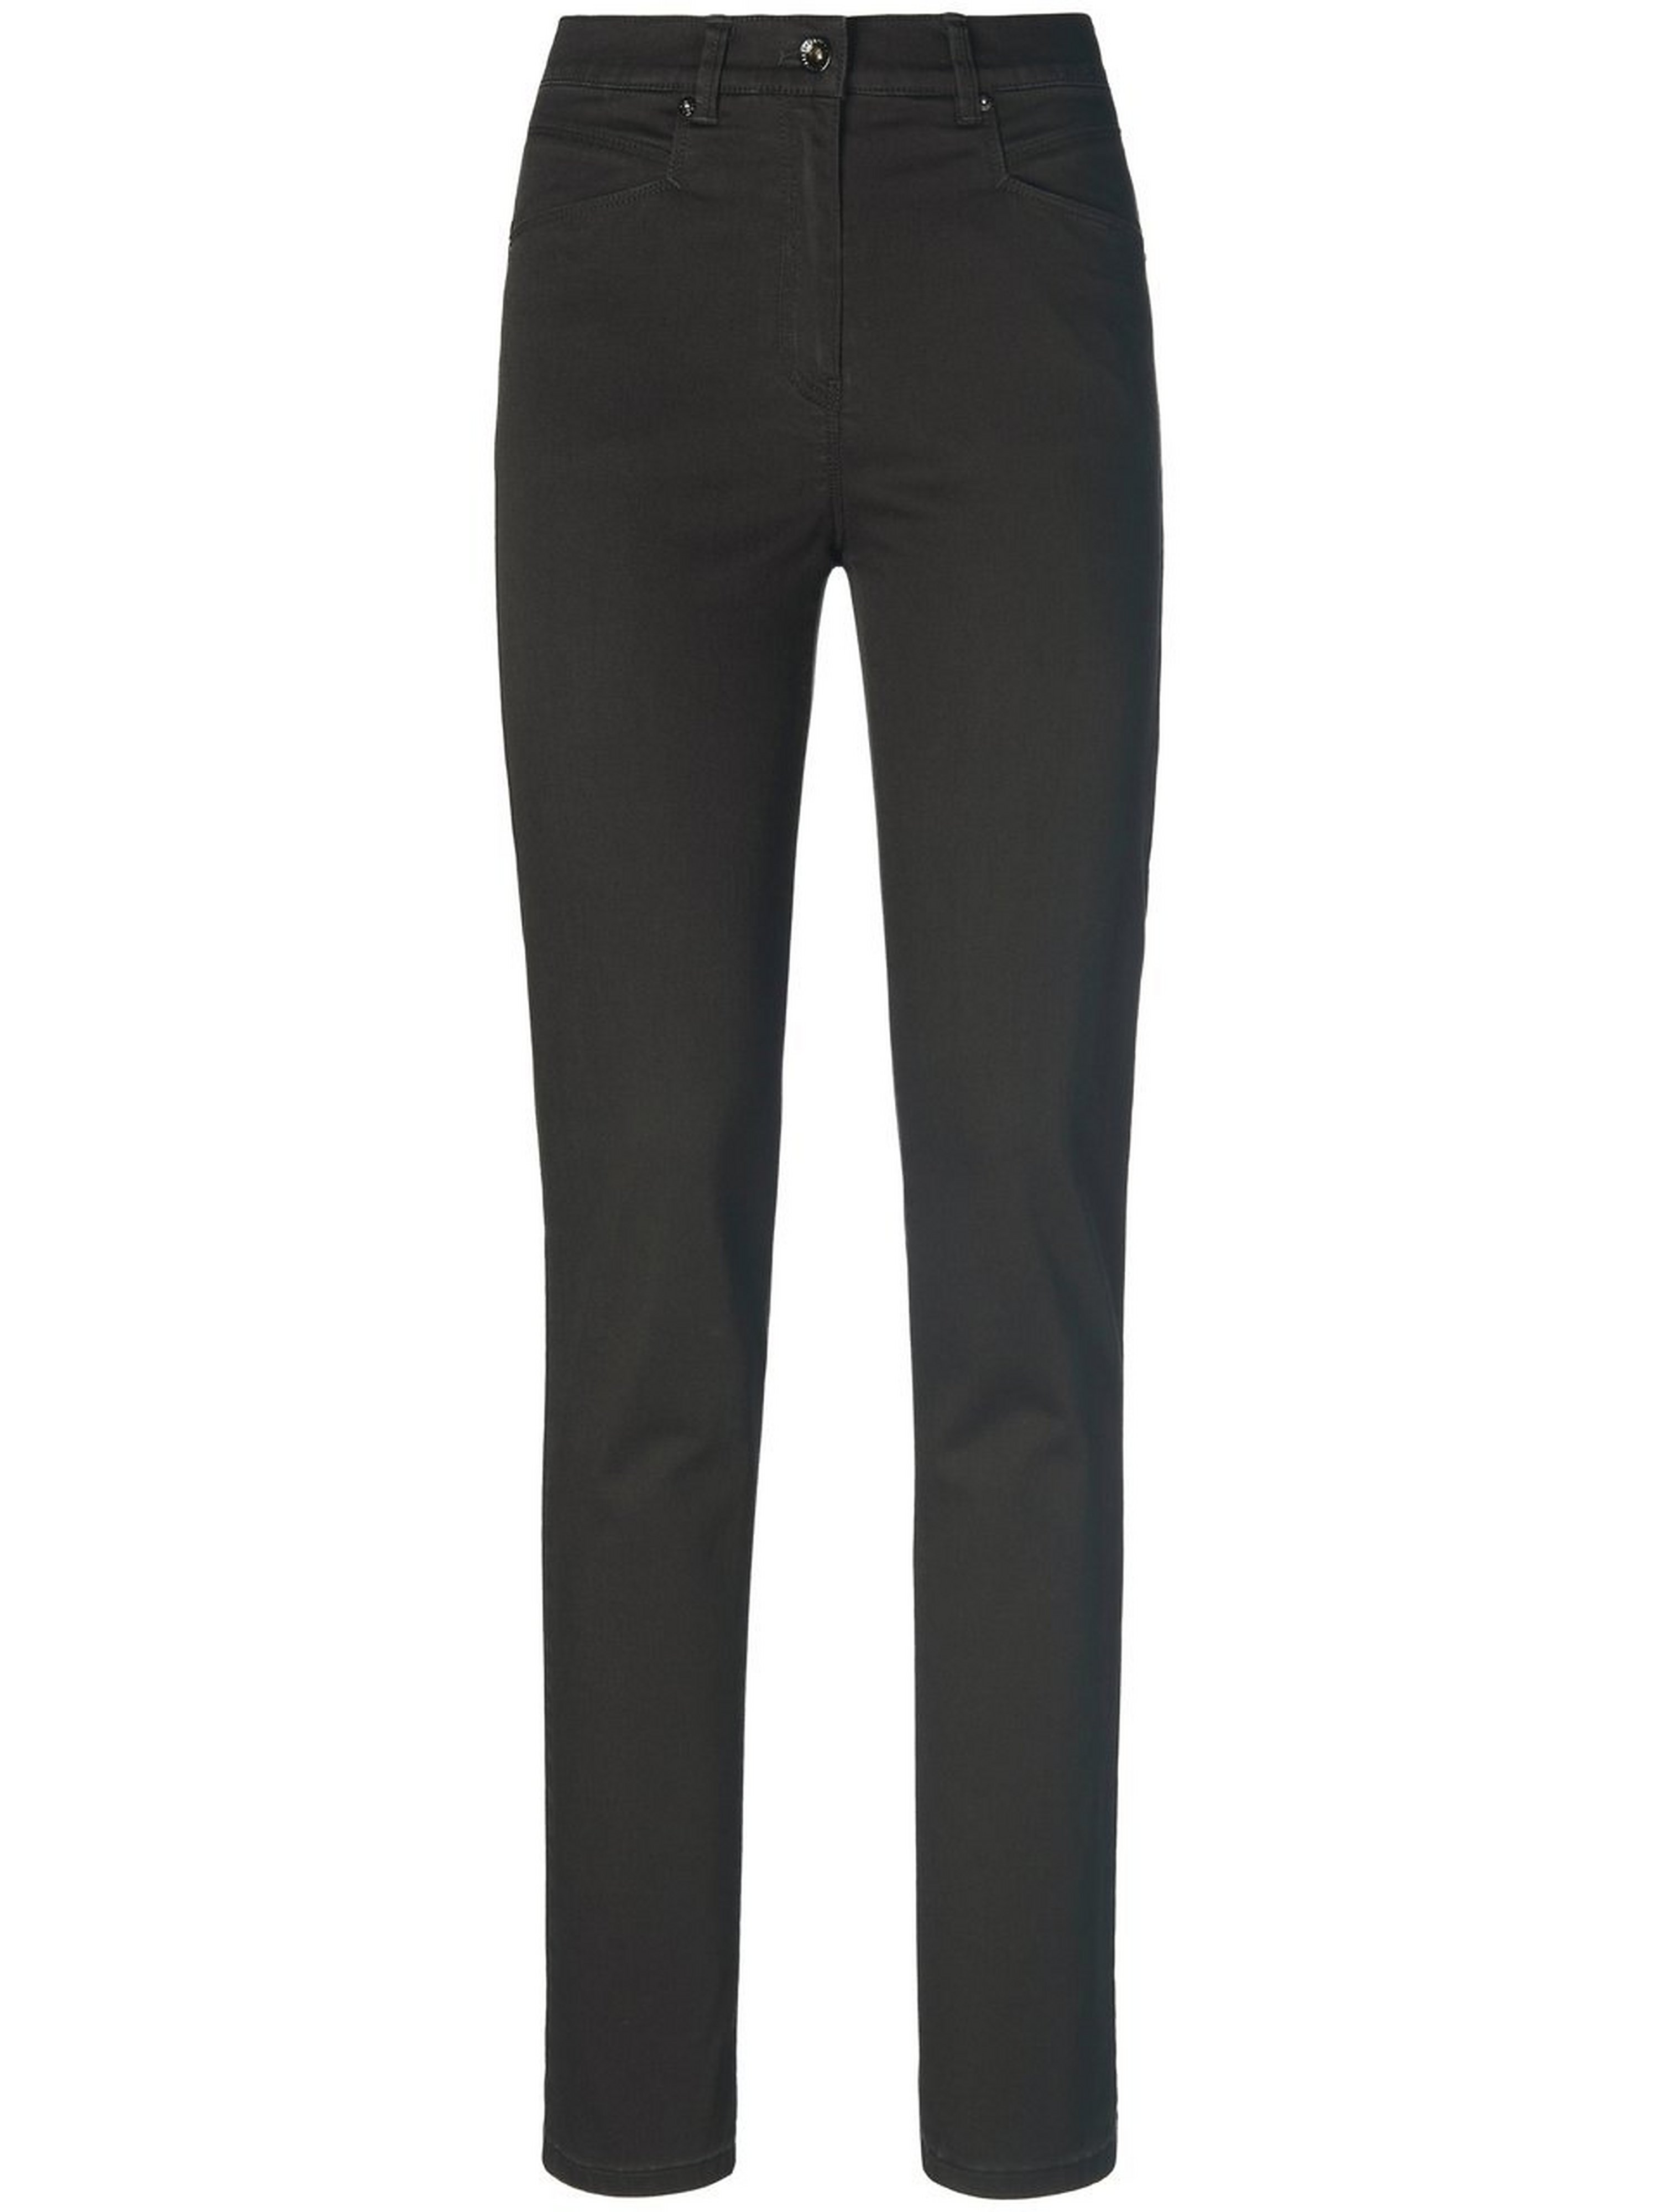 Corrigerende ProForm S Super Slim jeans model Lea Van Raphaela by Brax denim